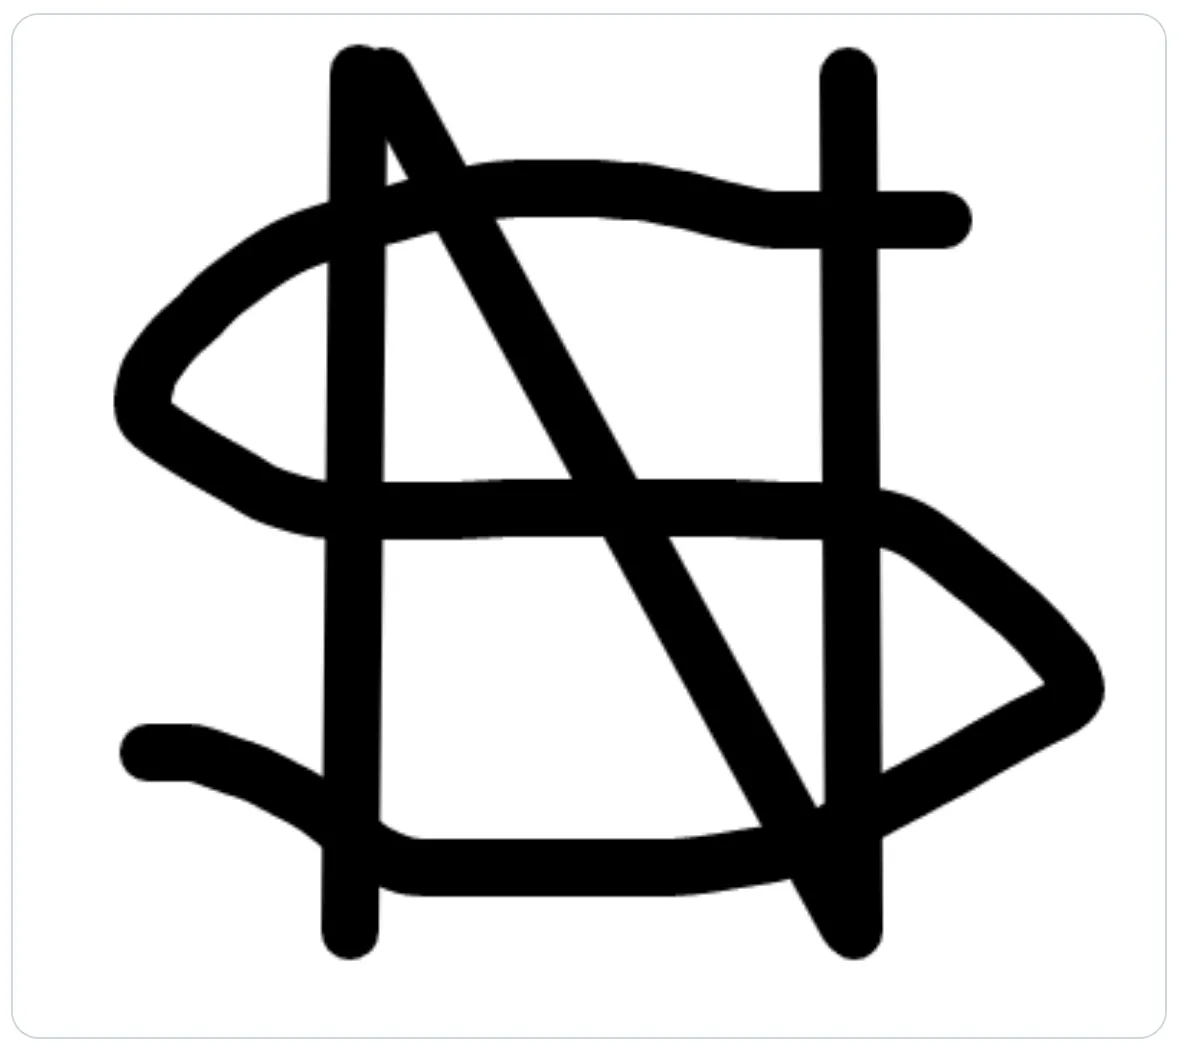 satoshi symbol design mock up